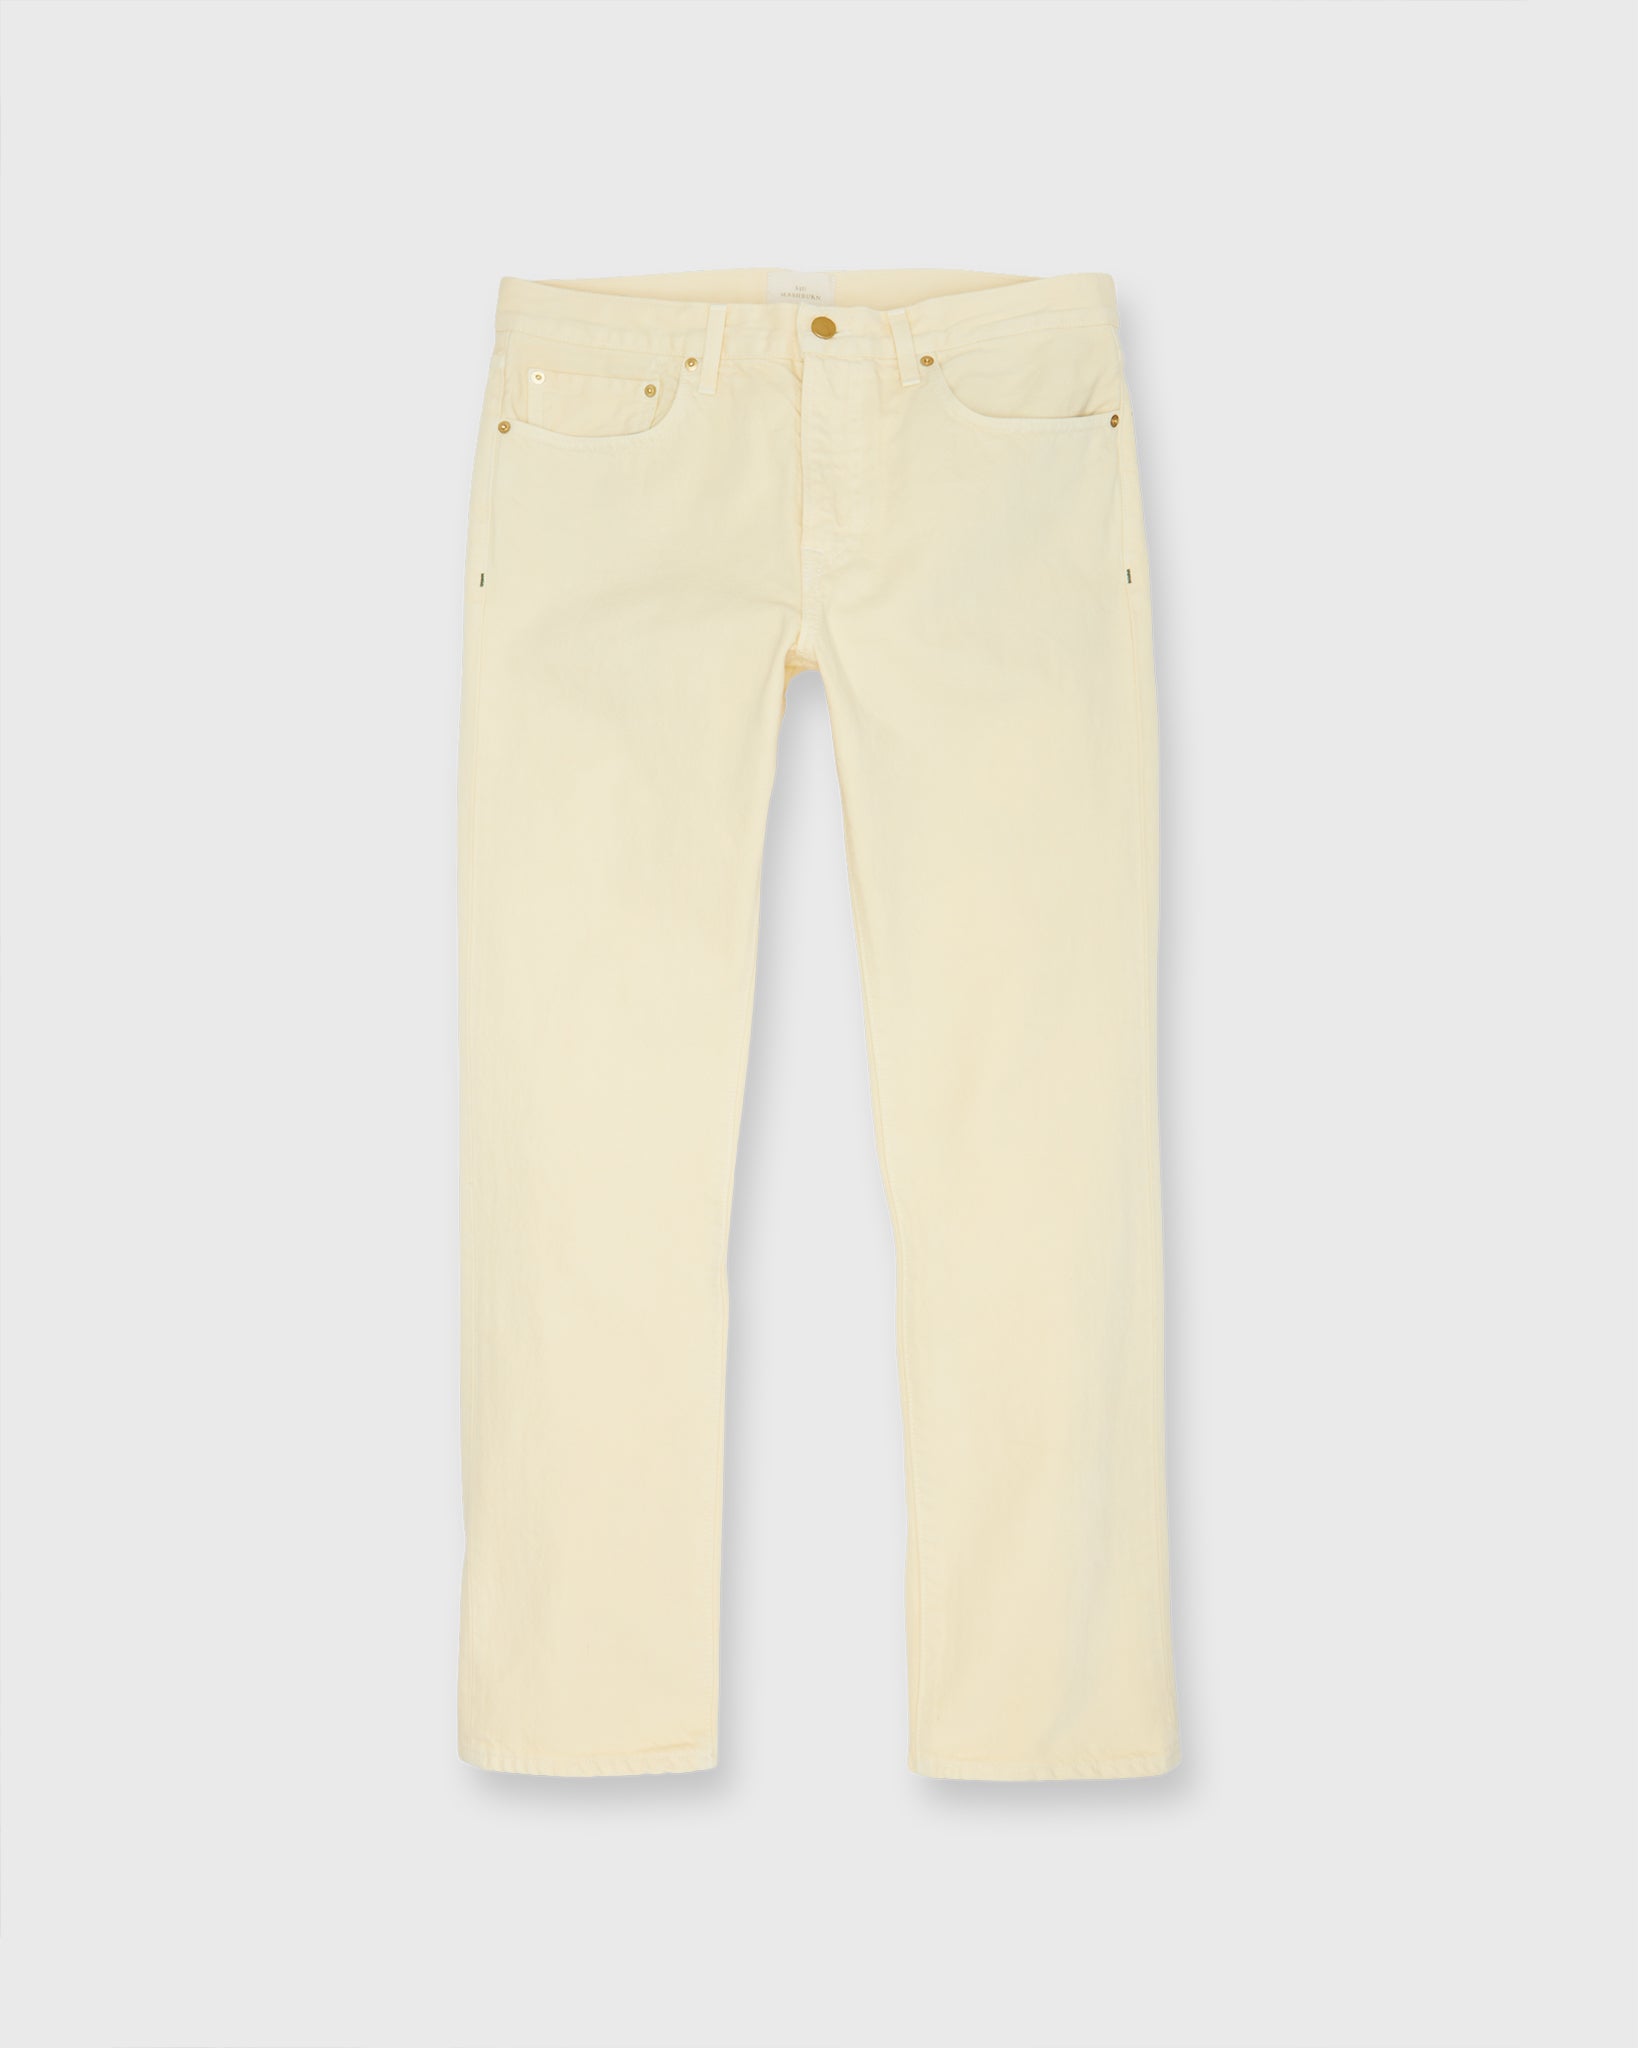 Slim Straight Jean in Pale Yellow Garment-Dyed Denim